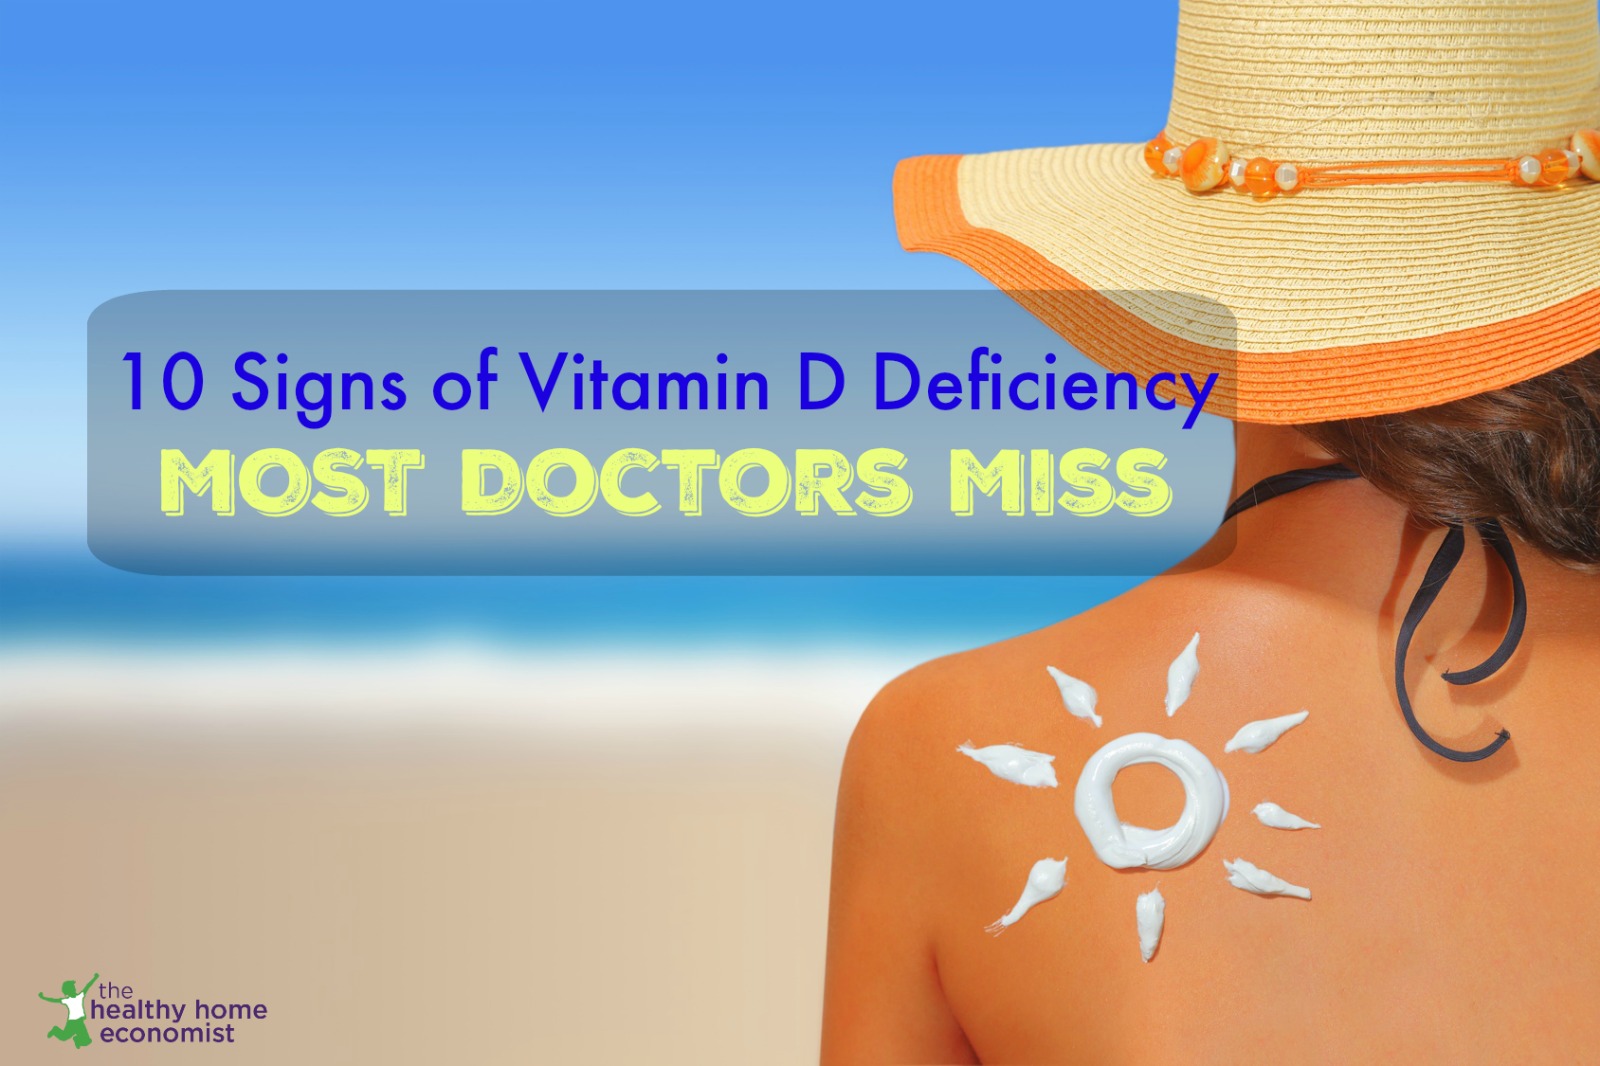 10 Serious Vitamin D Deficiency Symptoms Many Doctors Miss